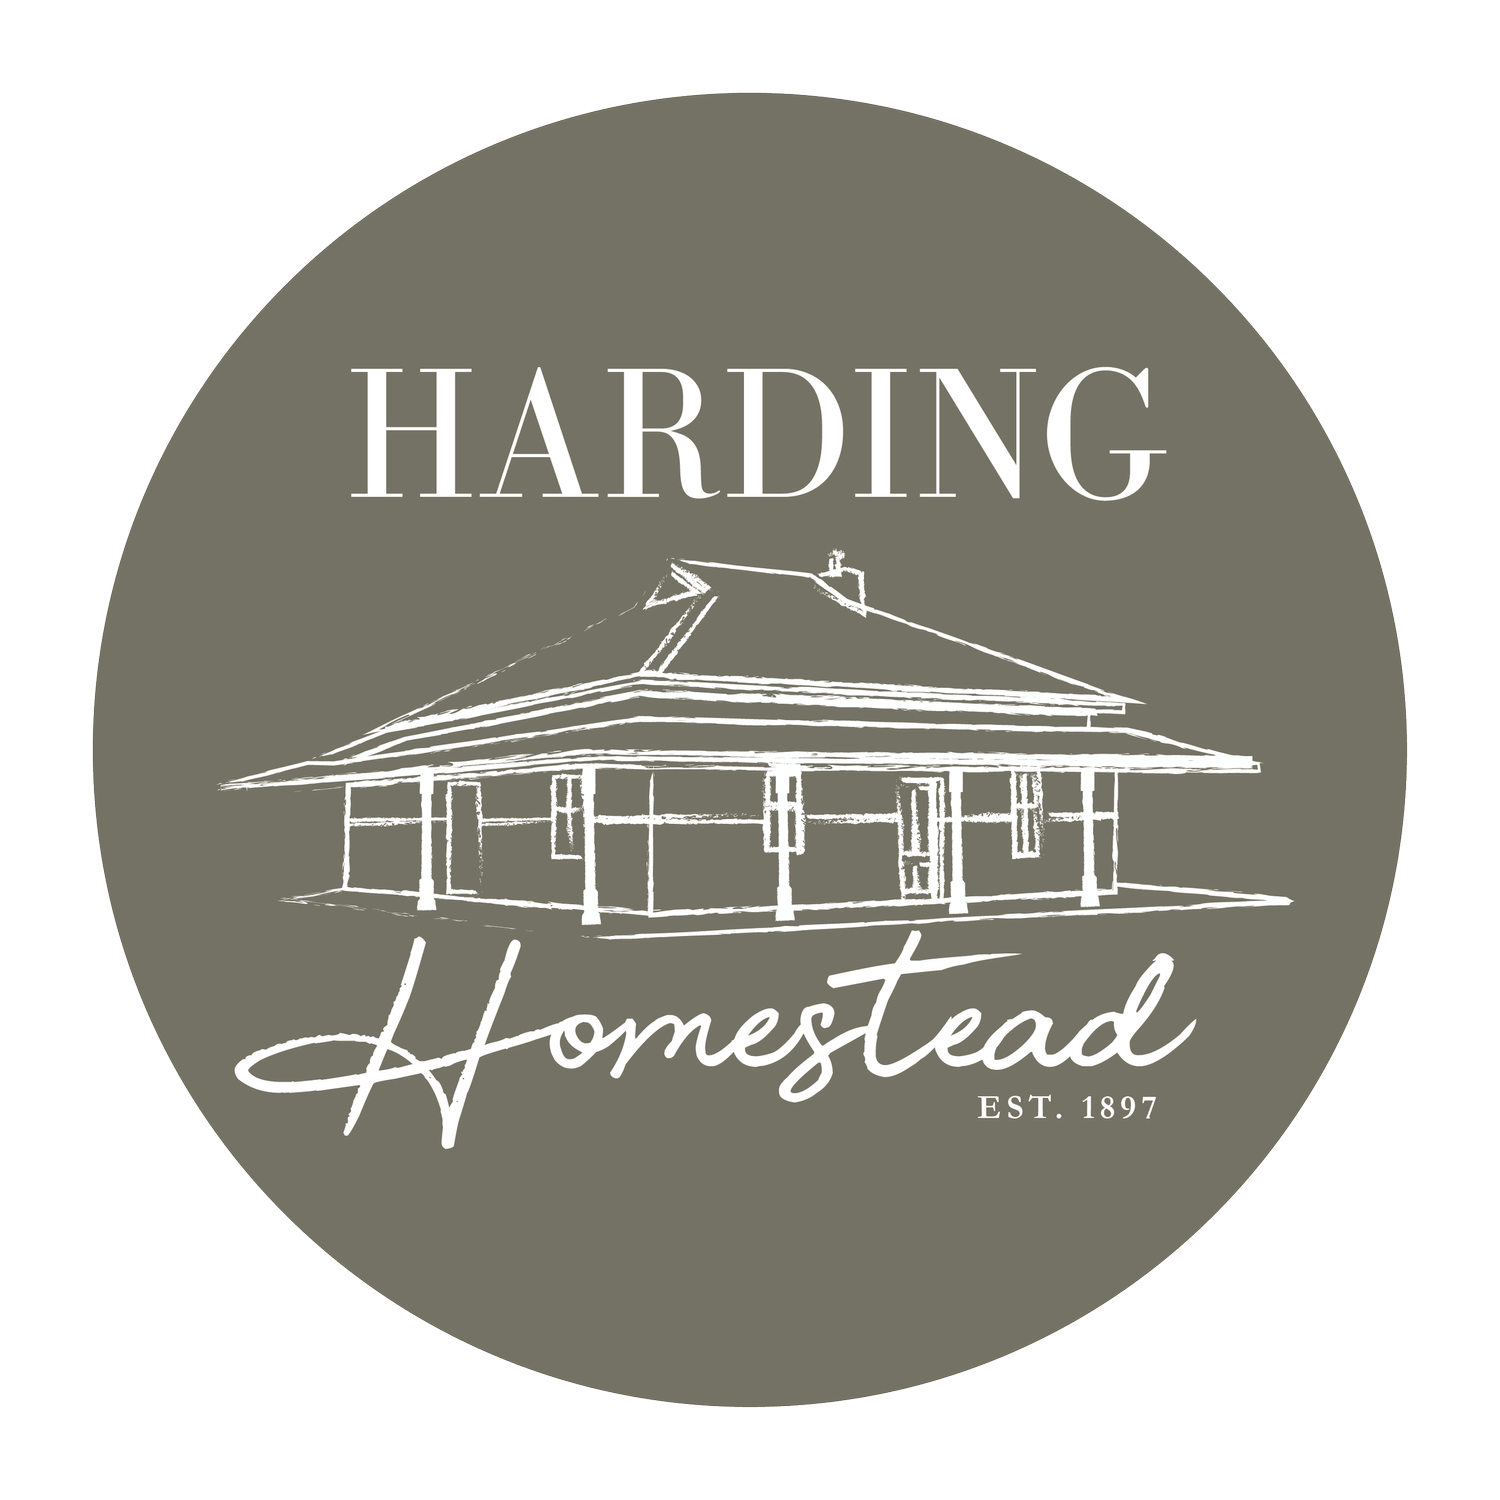 Harding Homestead